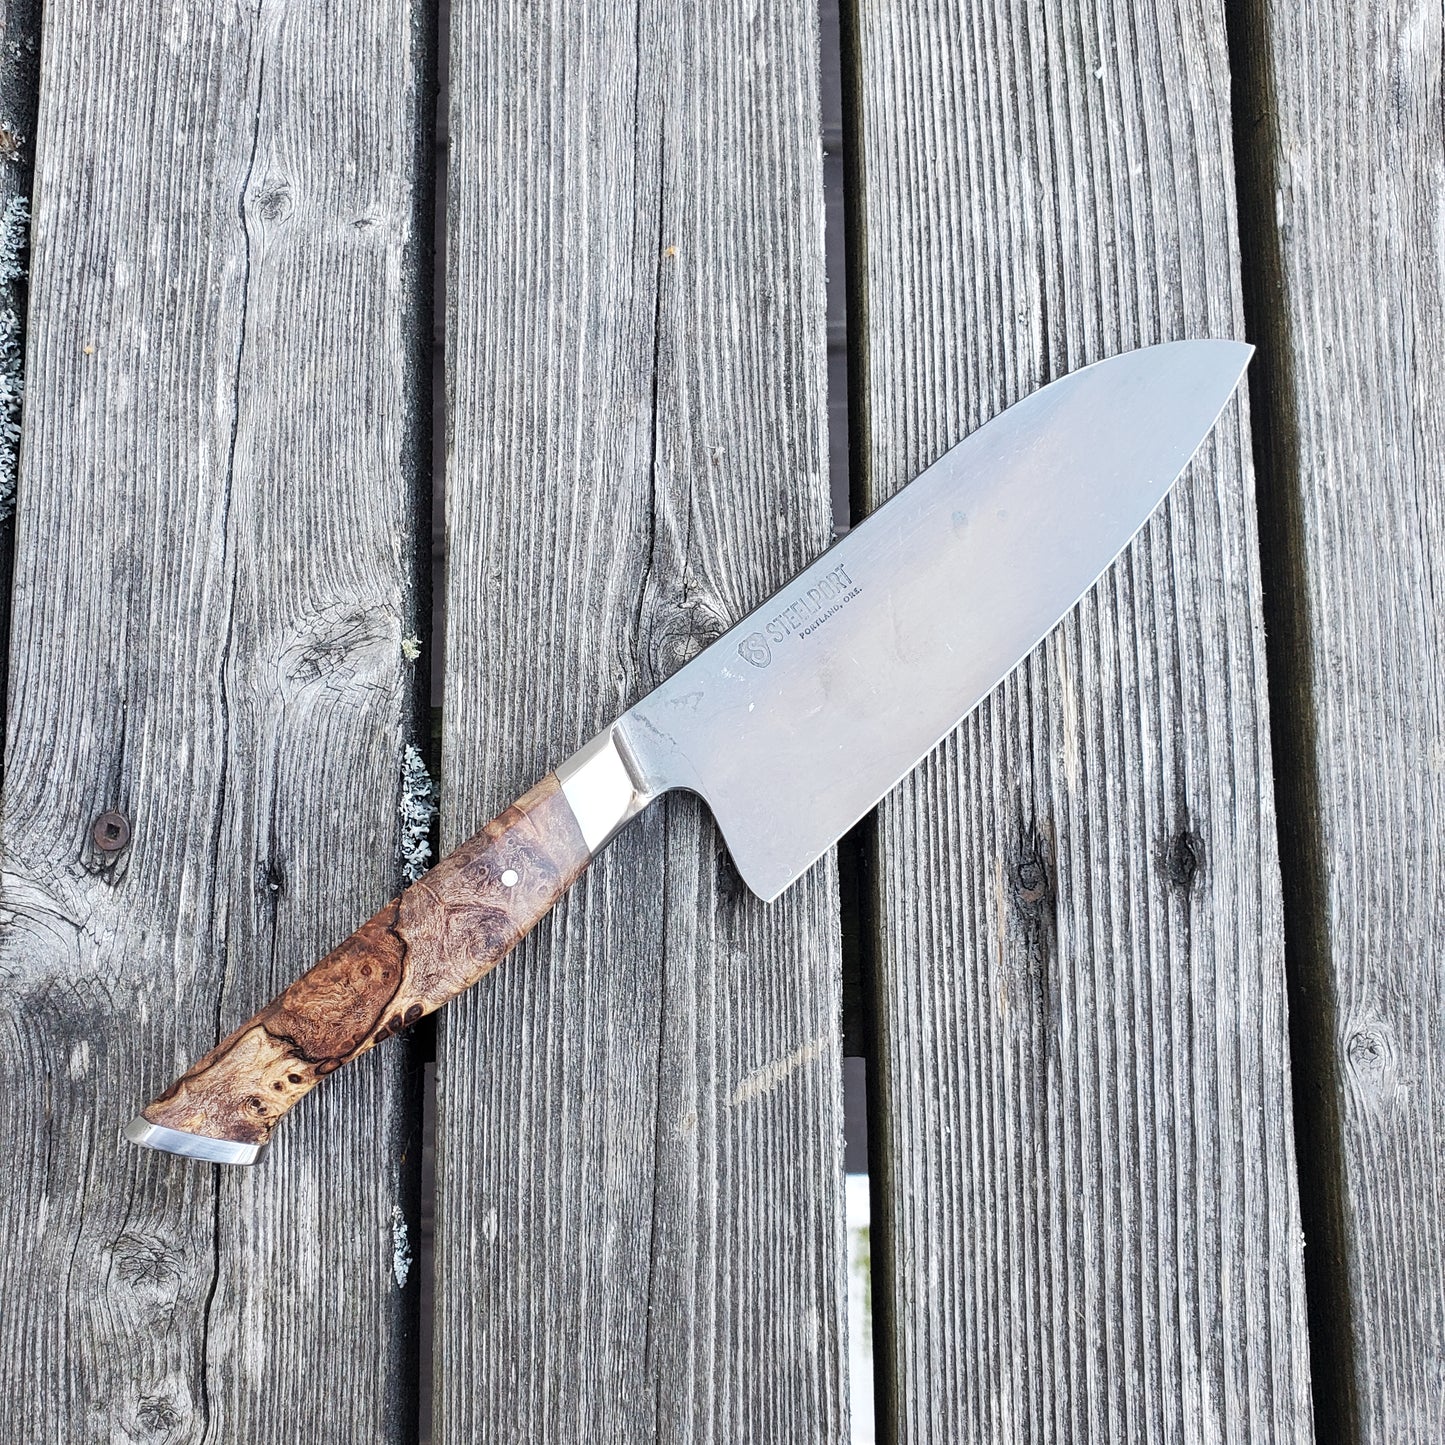 Steelport Knife Co. 6 Chef Knife – Uptown Cutlery